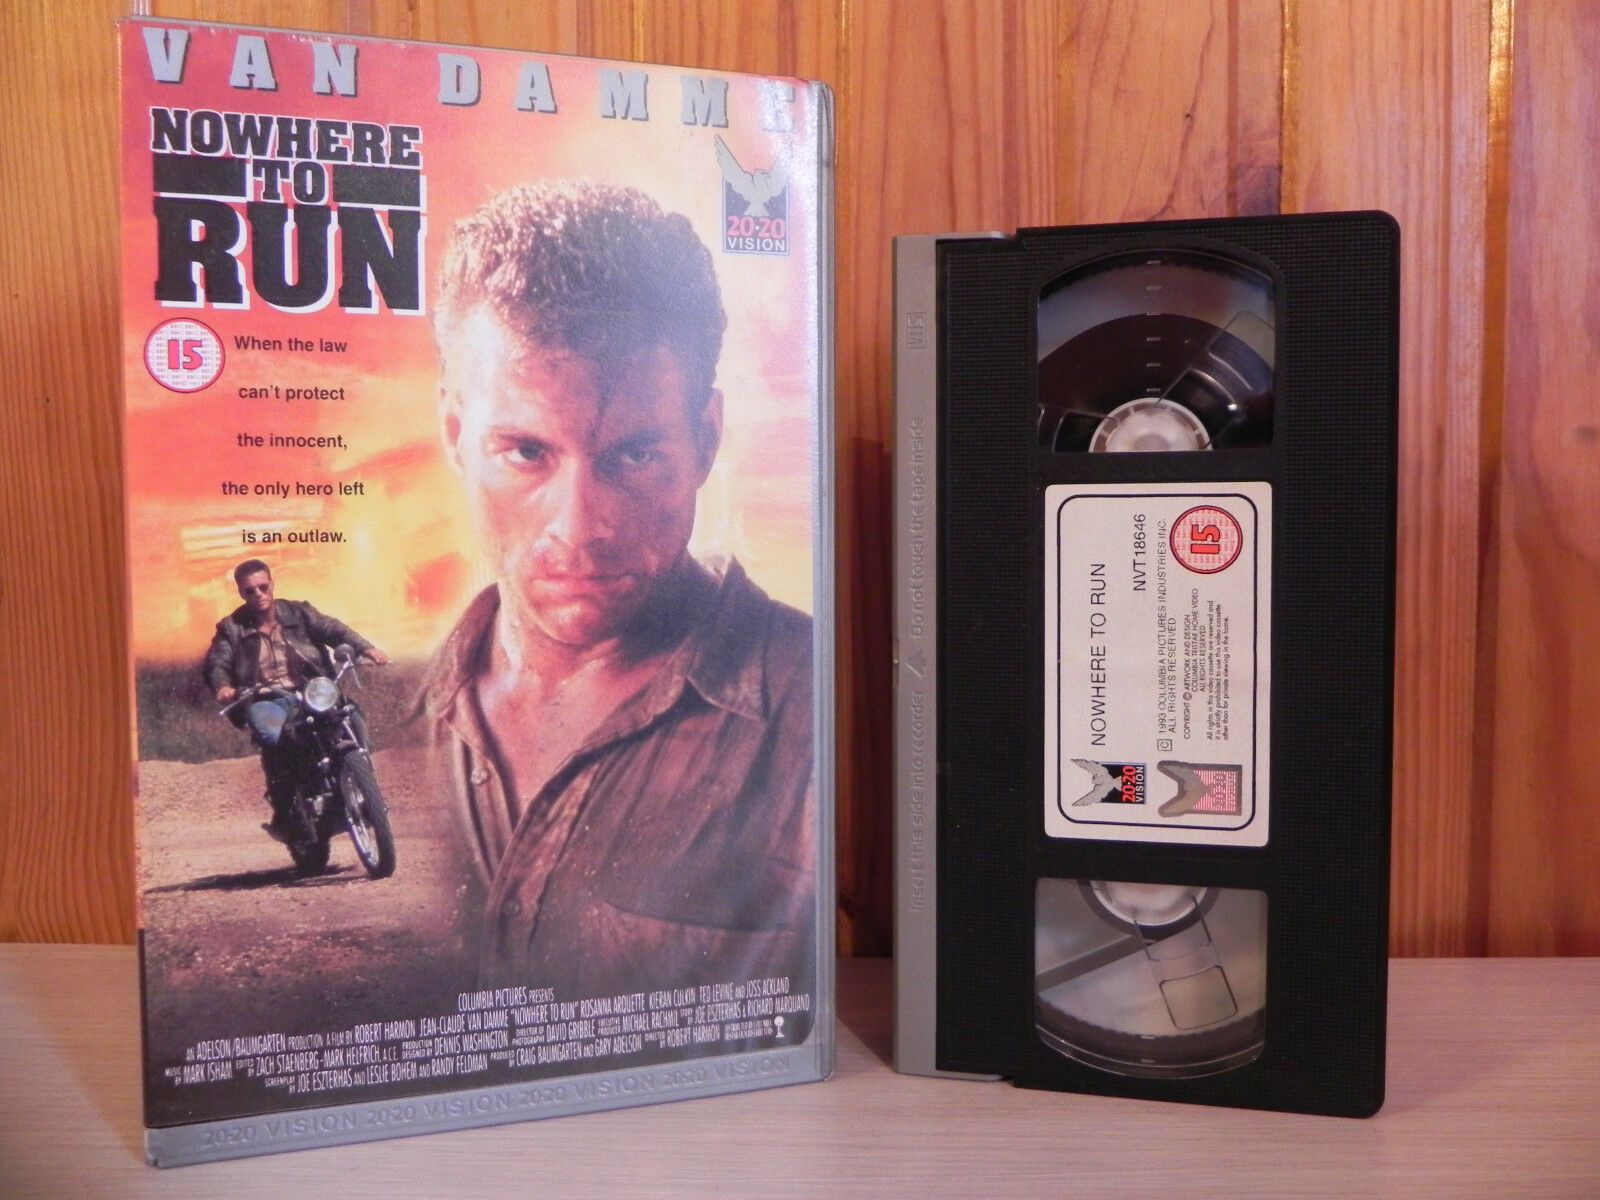 Nowhere To Run - Van Damme - 20/20 Video - Kickboxing - Big Box - Action - VHS-